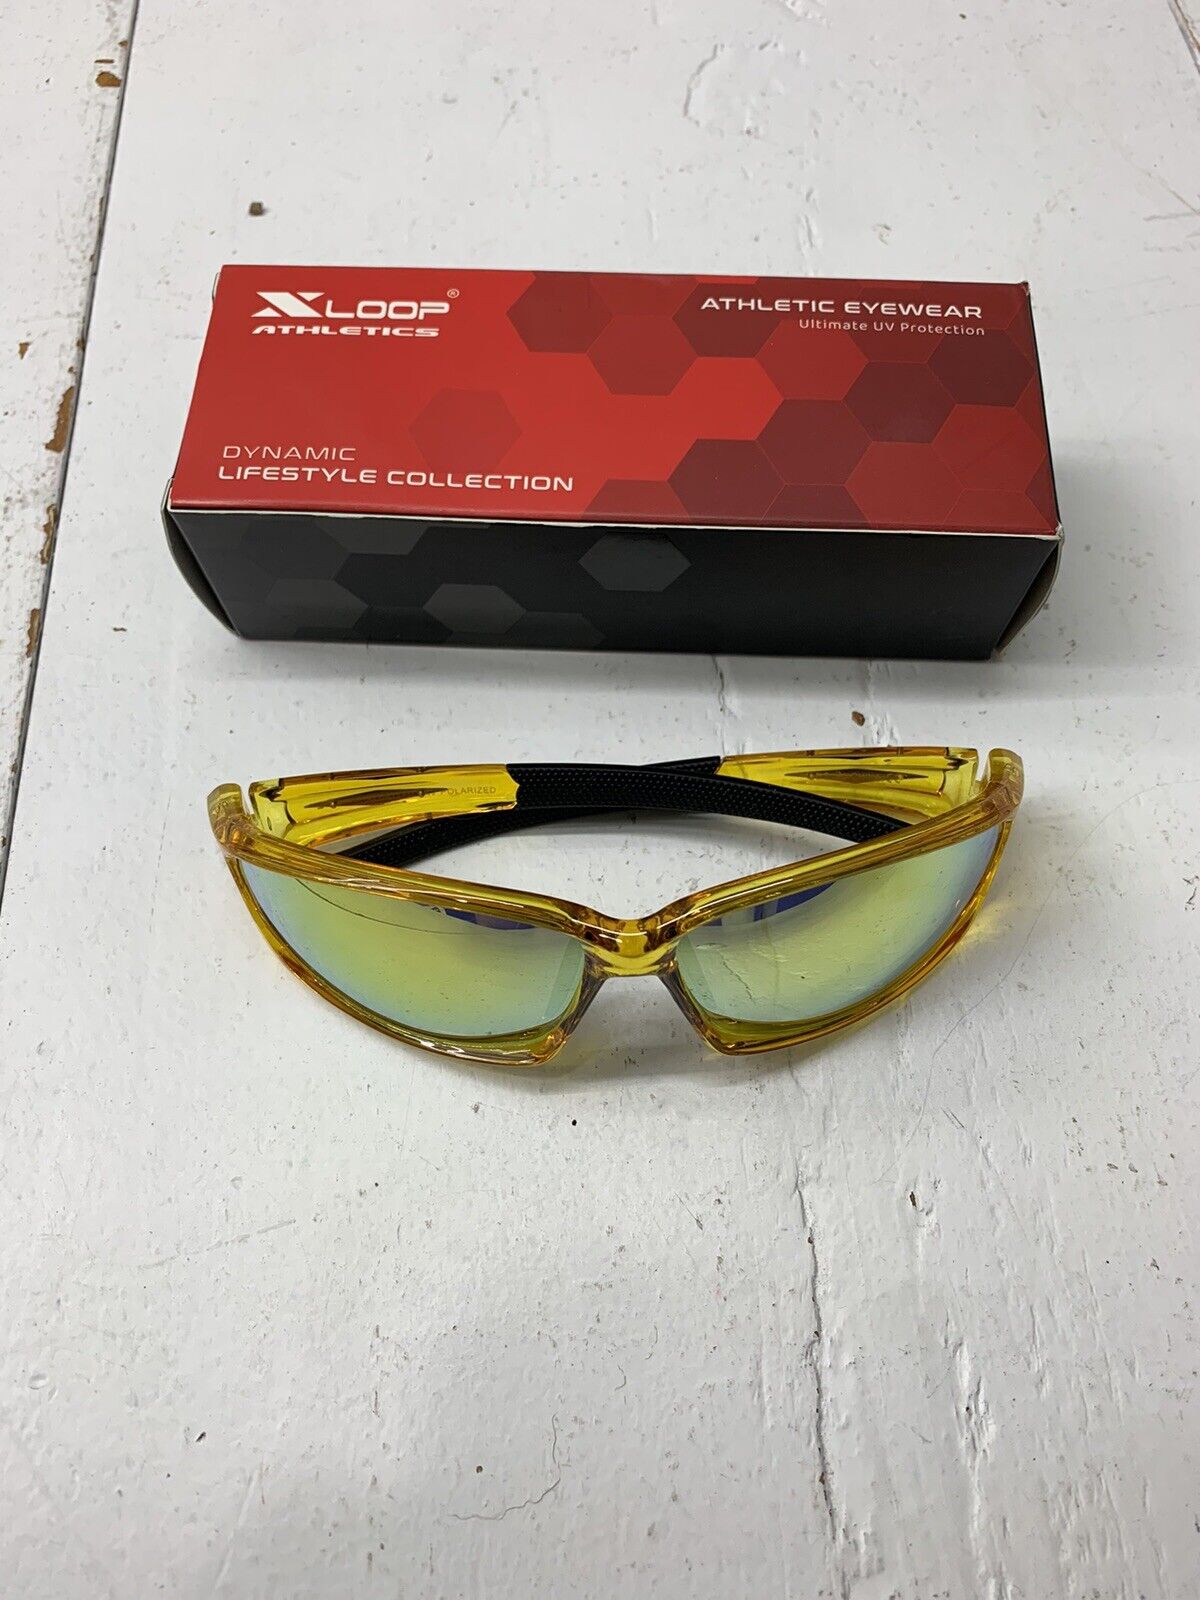 FEIDU Polarized Sunglasses for Men Retro Transparent Black FD2149 NEW! |  eBay